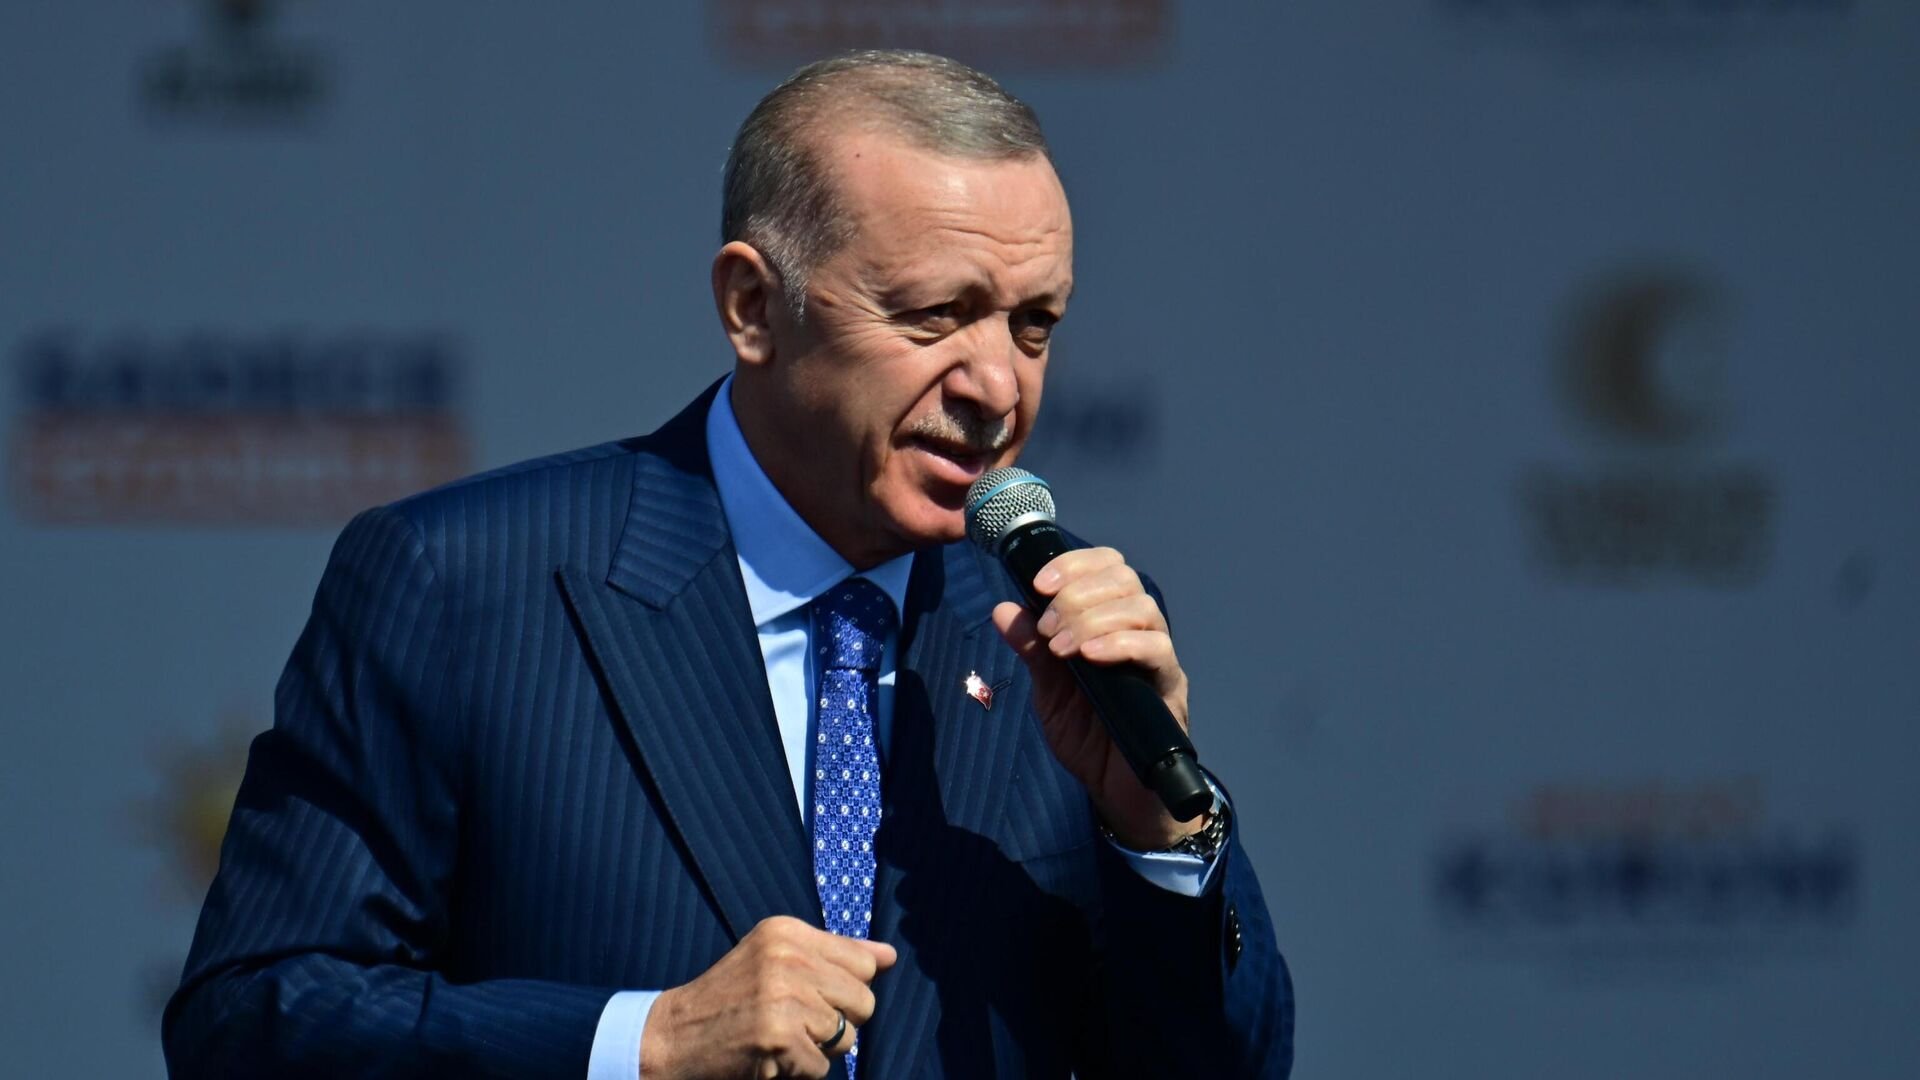 Erdoğan backs Finance Minister Şimşek, dispels rumors of economic team overhaul